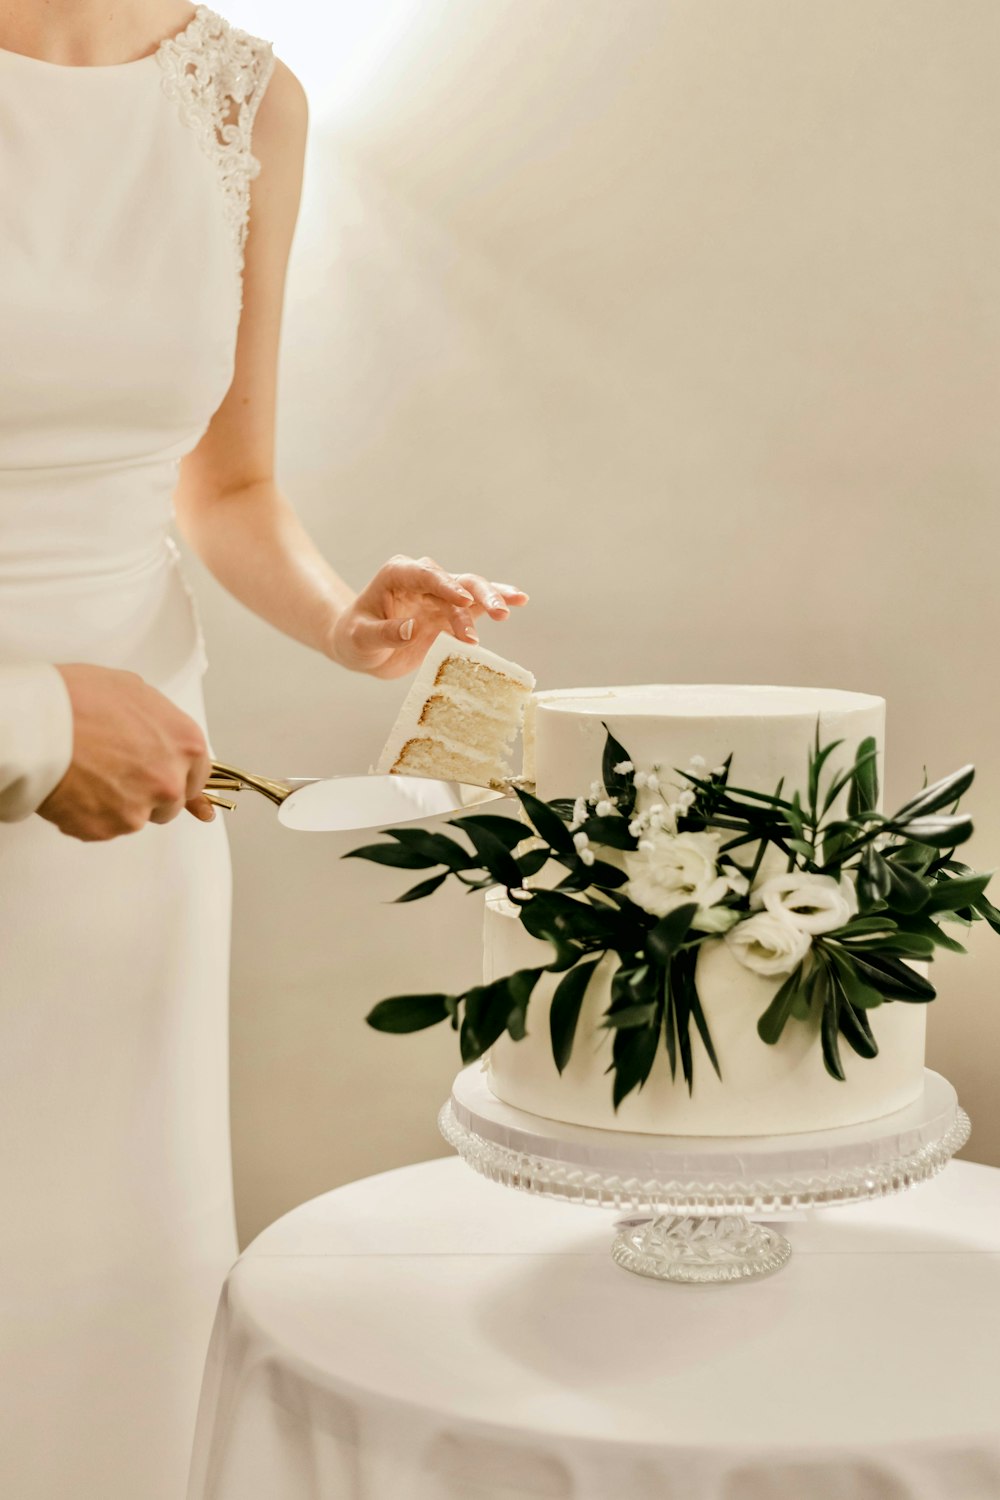 a woman cutting a cake